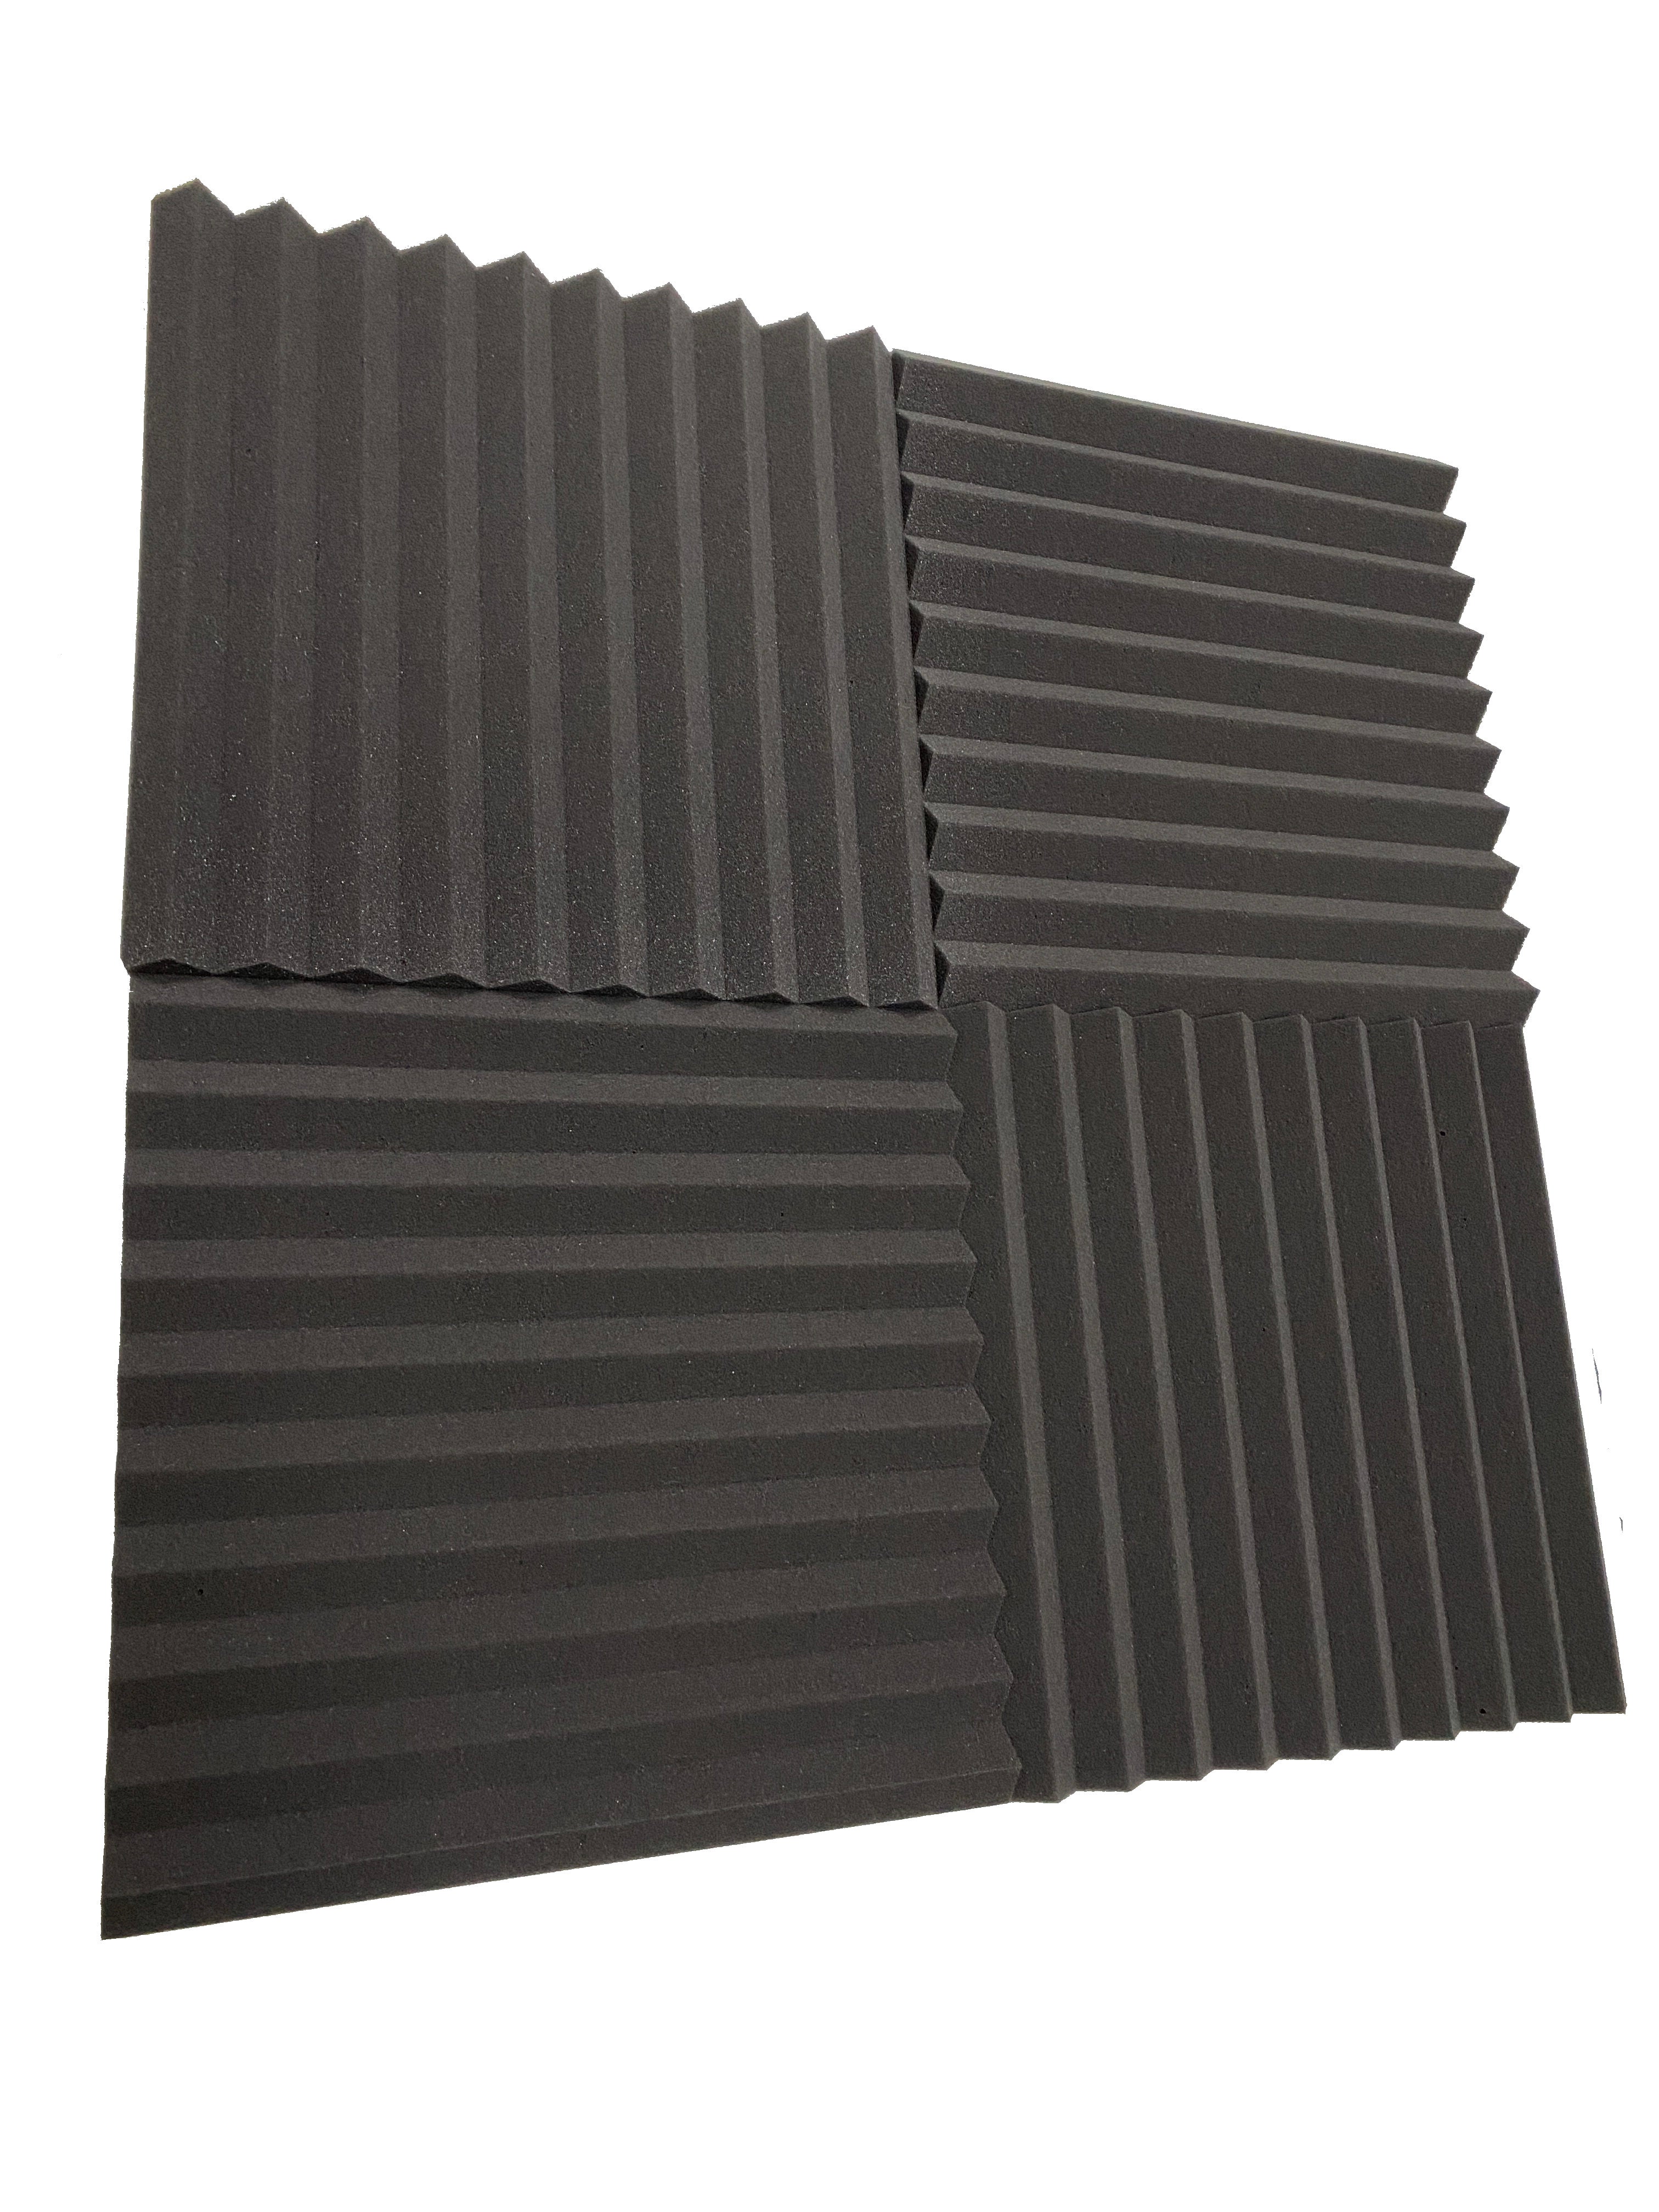 Wedge 15" Acoustic Studio Foam Tile Kit – 72 Fliesen, 10,44 m² Abdeckung